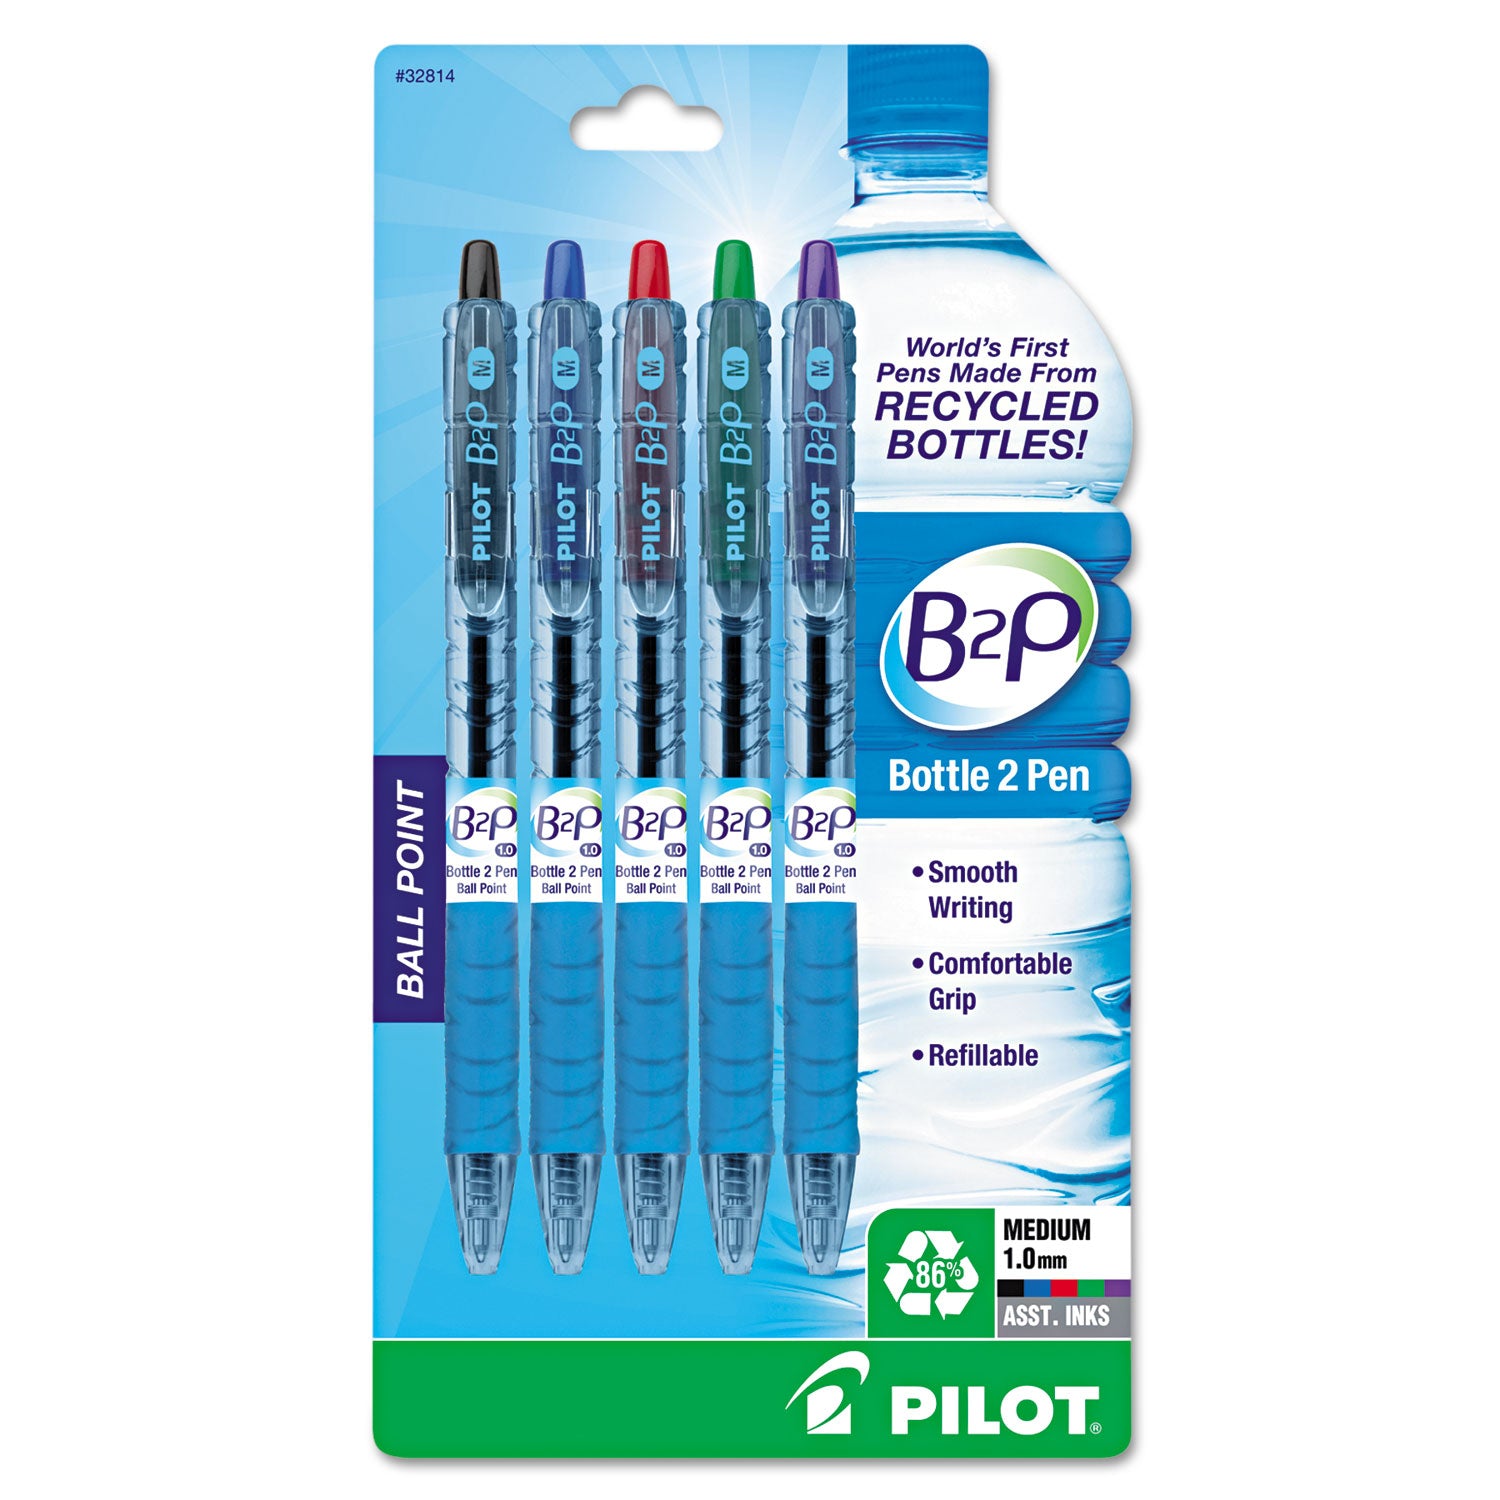 B2P Bottle-2-Pen Recycled Ballpoint Pen, Retractable, Medium 1 mm, Assorted Ink Colors, Translucent Blue Barrel, 5/Pack - 1